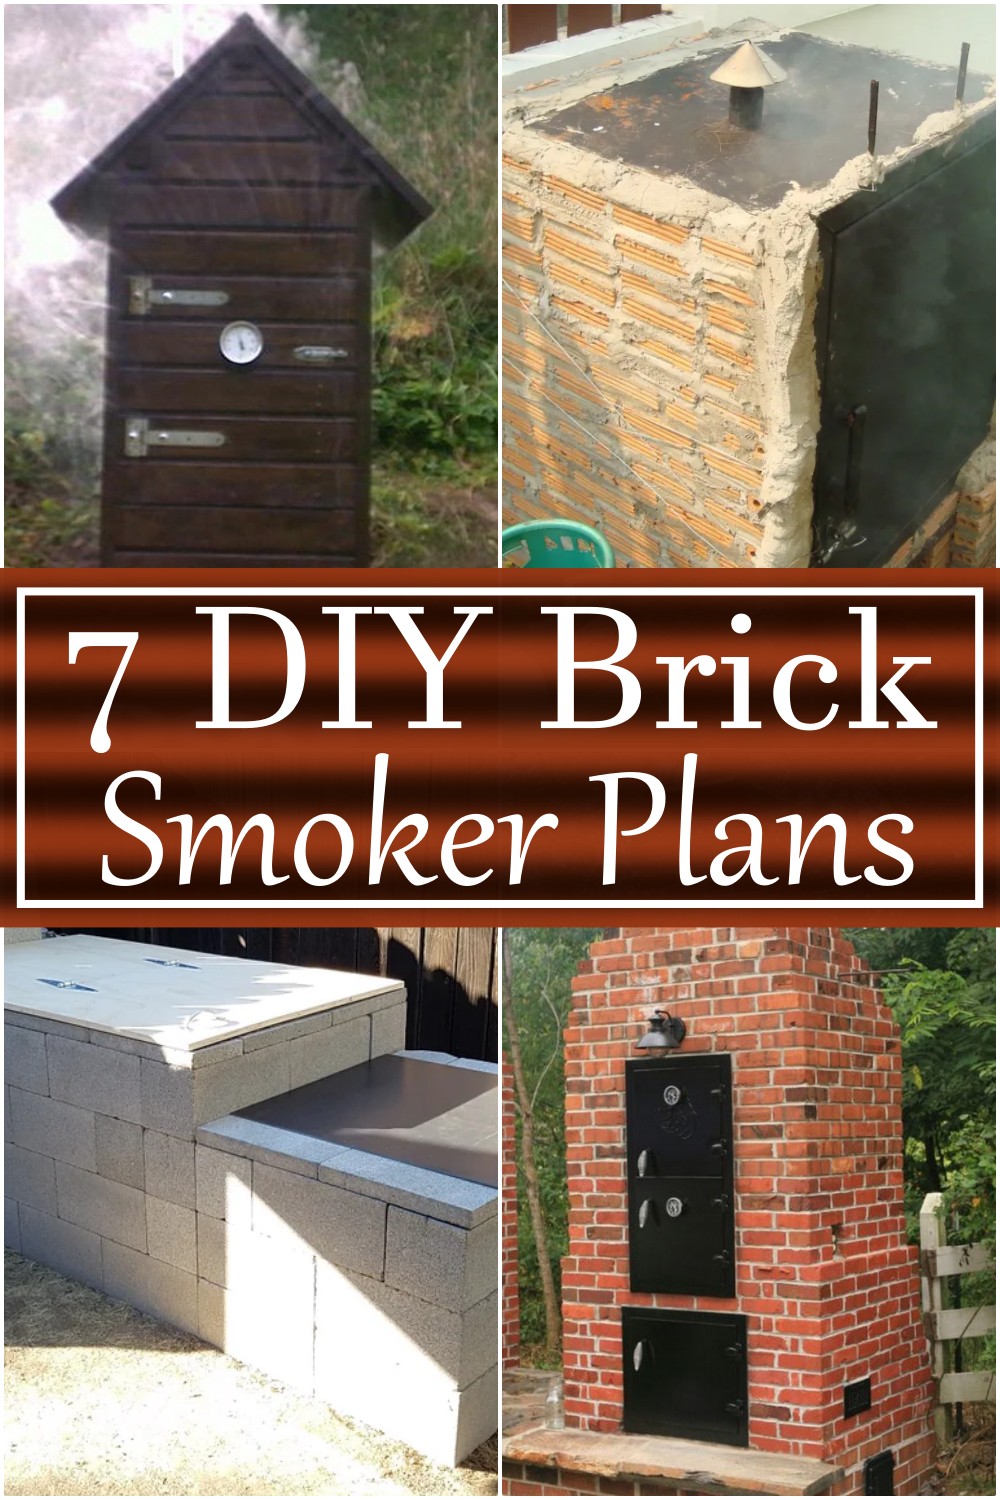 DIY Brick Smoker Plans